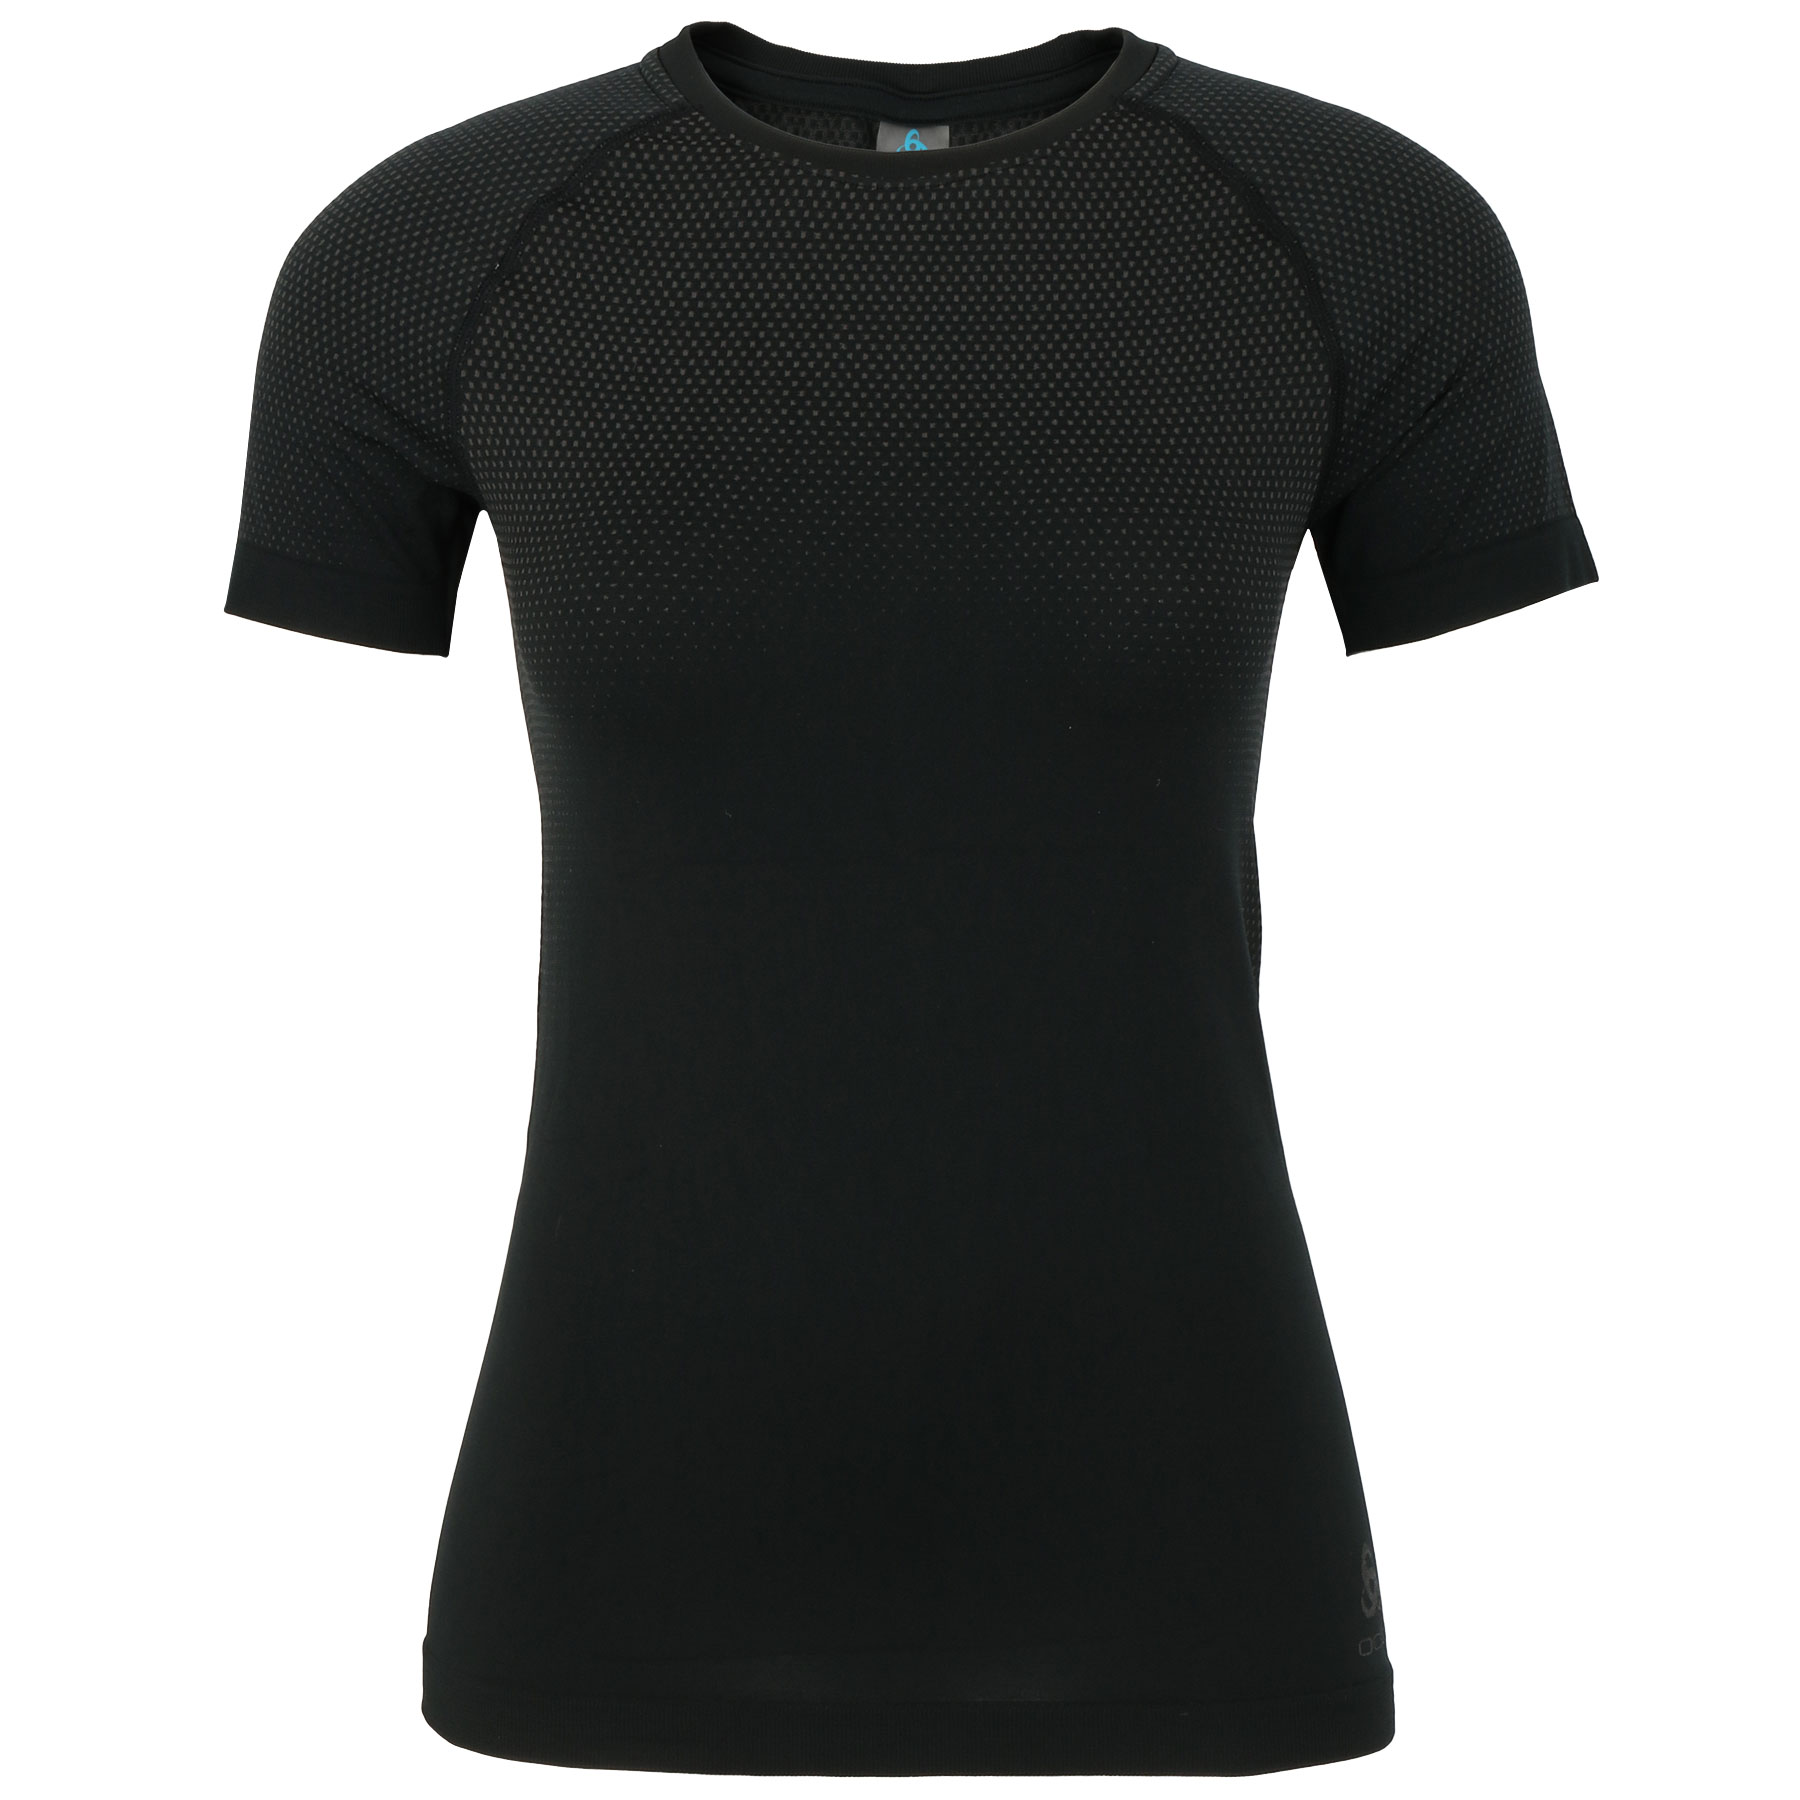 Picture of Odlo Performance Light Base Layer T-Shirt Women - black